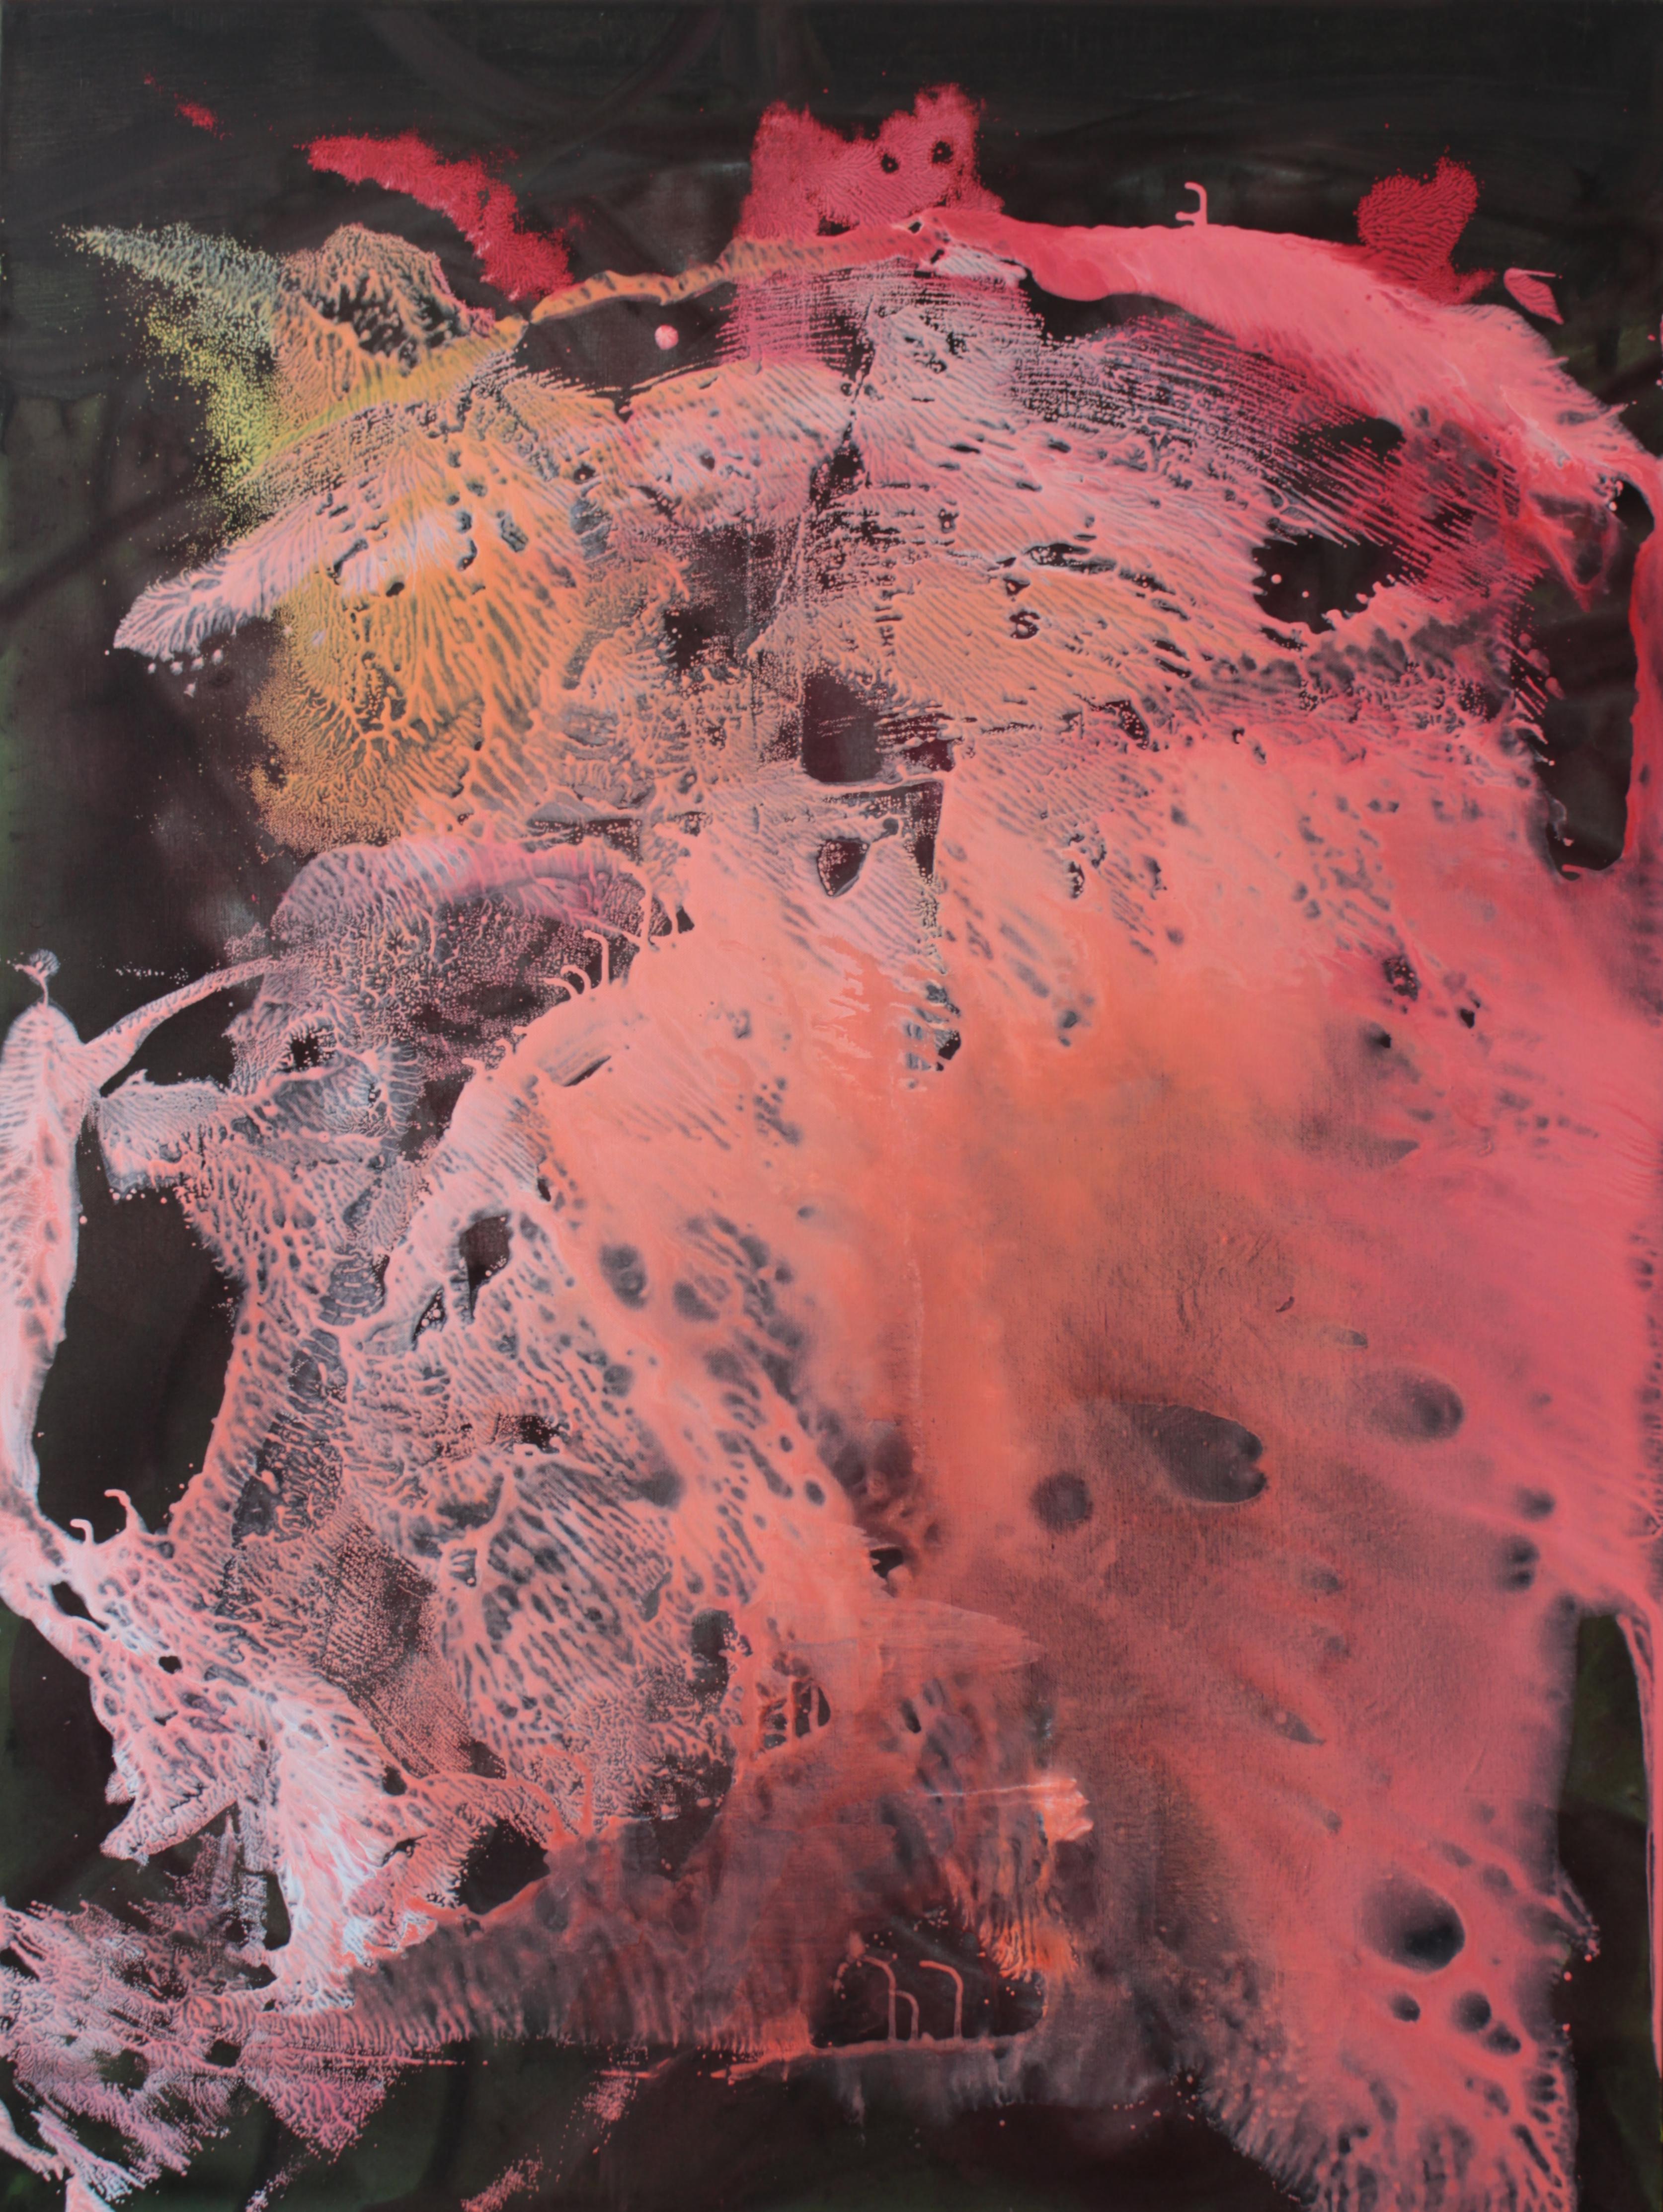 Acrylic Painting "Pinkish On Black", 2016 by Udo Haderlein